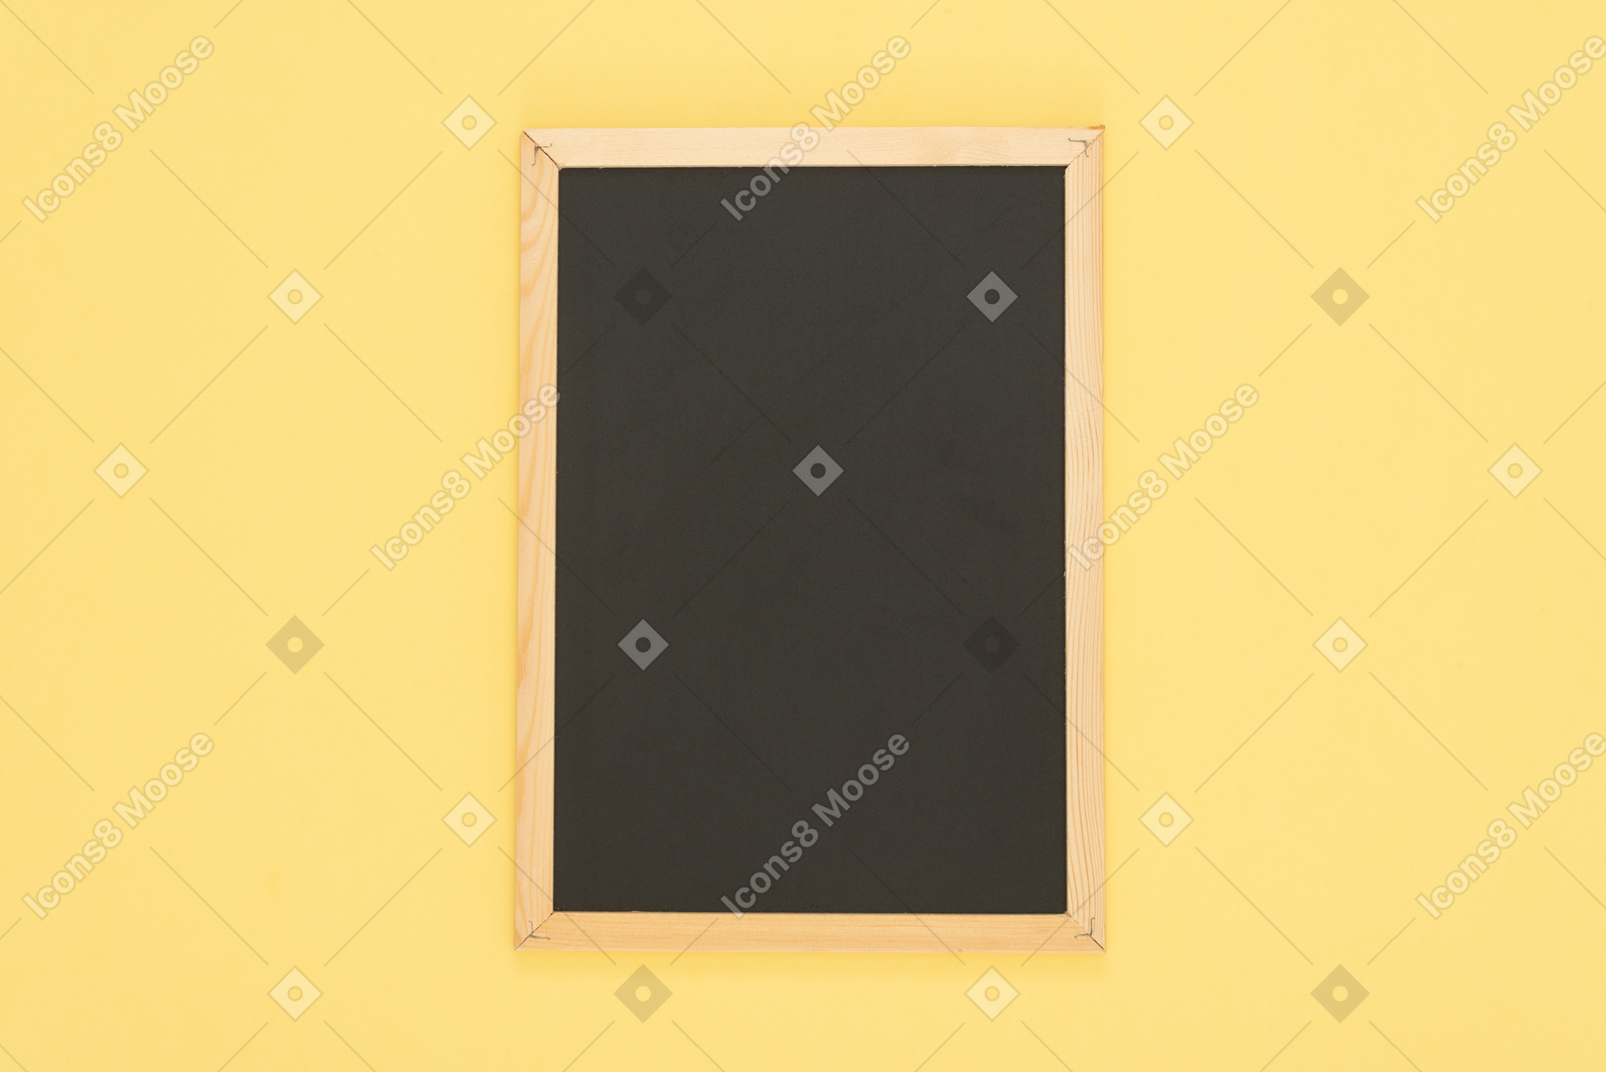 Blackboard mockup